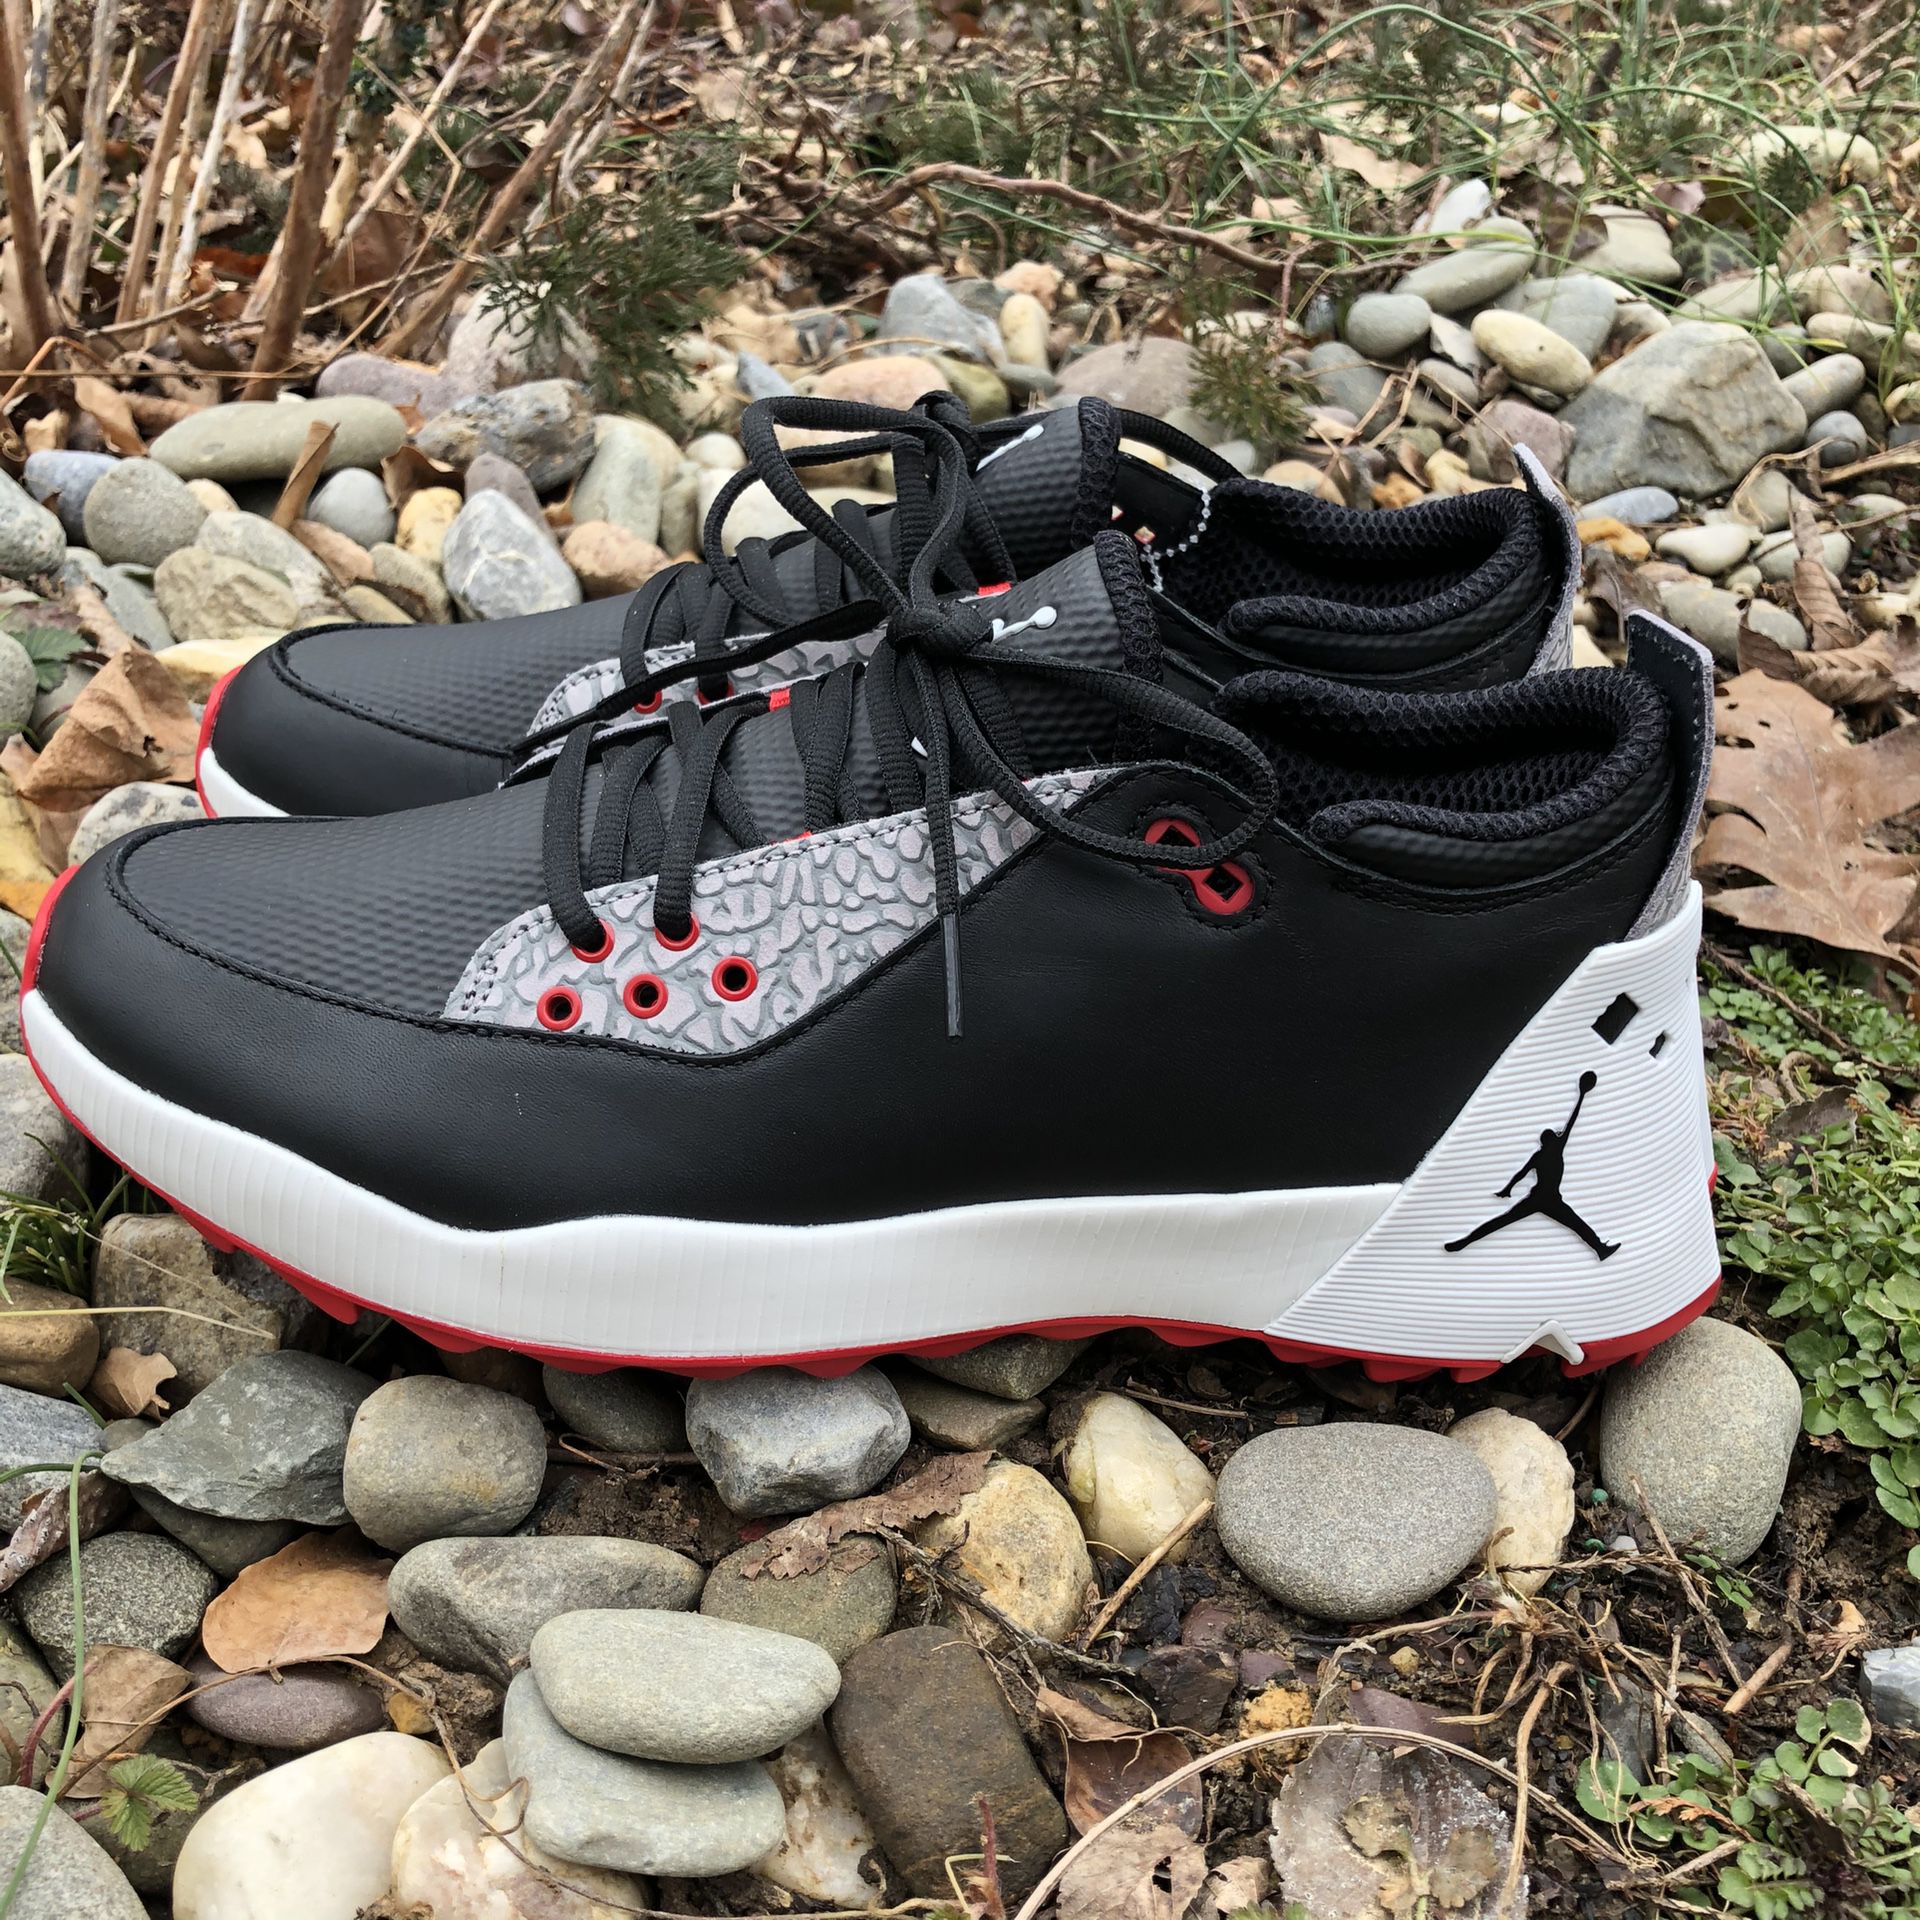 Nike Mens Jordan ADG 2 Golf Shoes Sz 11.5 Black CT7812-001 Lace Up NEW Low Top